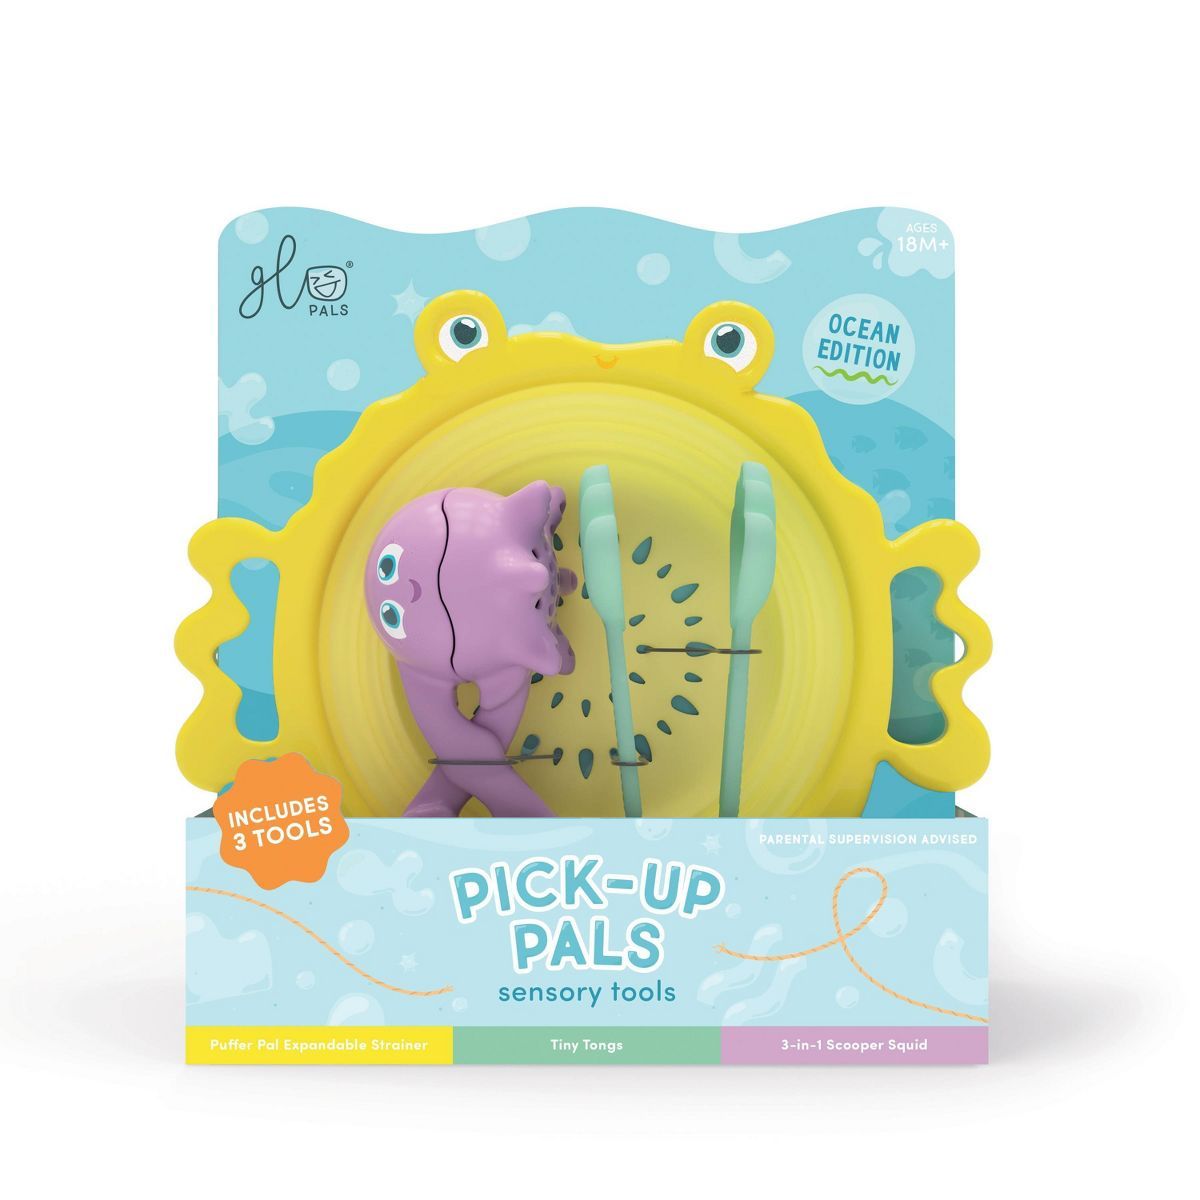 Glo Pals Pick-Up Pals Toddler Sensory Tools Play Pack | Target